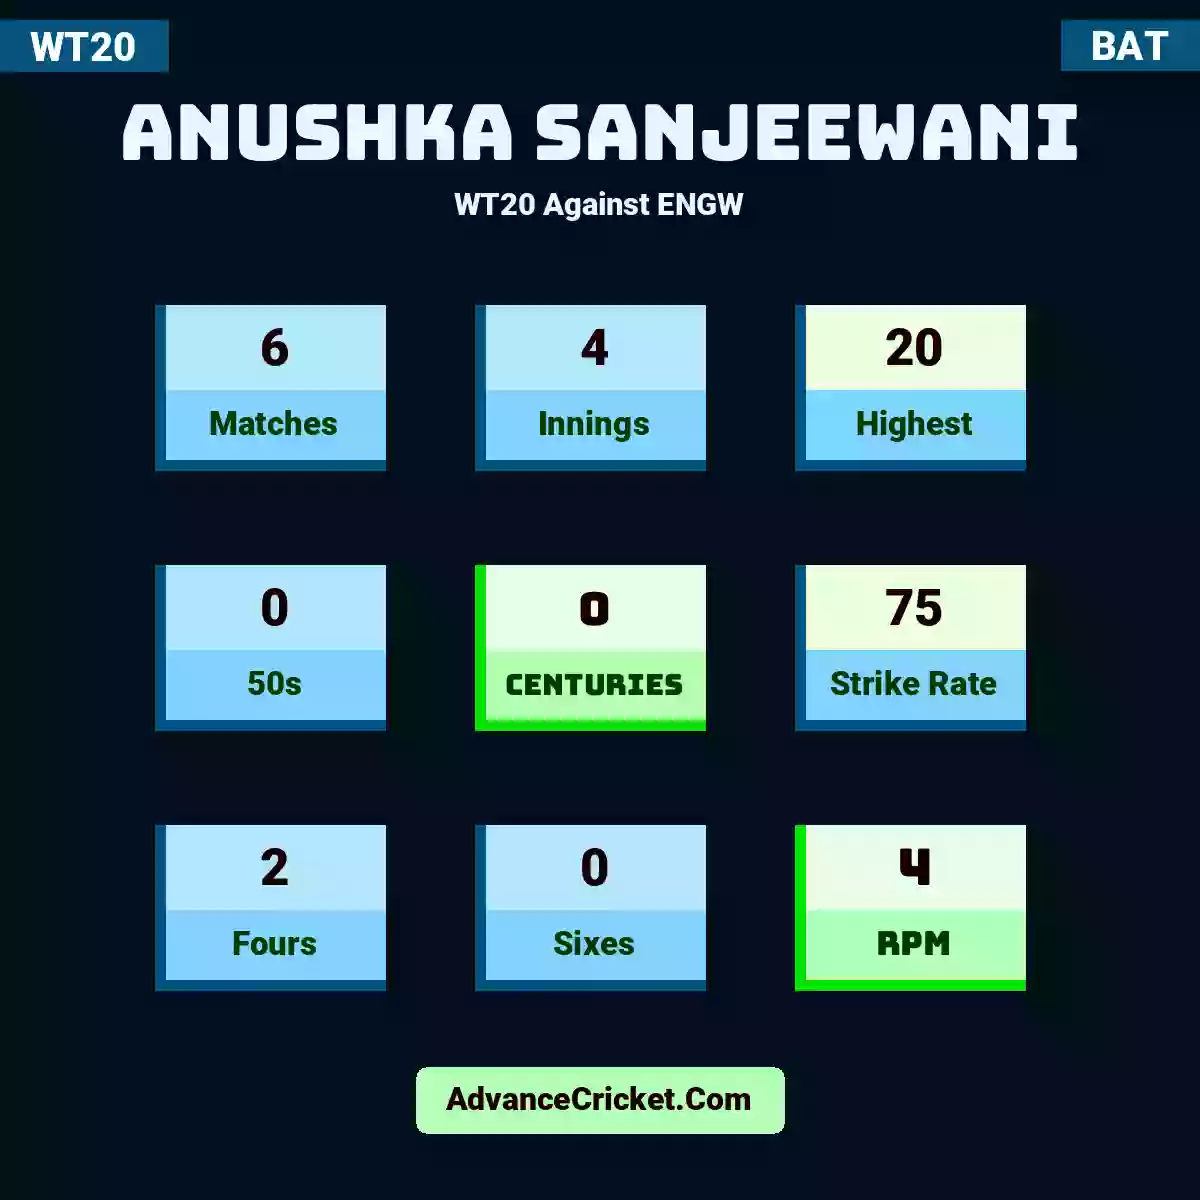 Anushka Sanjeewani WT20  Against ENGW, Anushka Sanjeewani played 6 matches, scored 20 runs as highest, 0 half-centuries, and 0 centuries, with a strike rate of 75. A.Sanjeewani hit 2 fours and 0 sixes, with an RPM of 4.